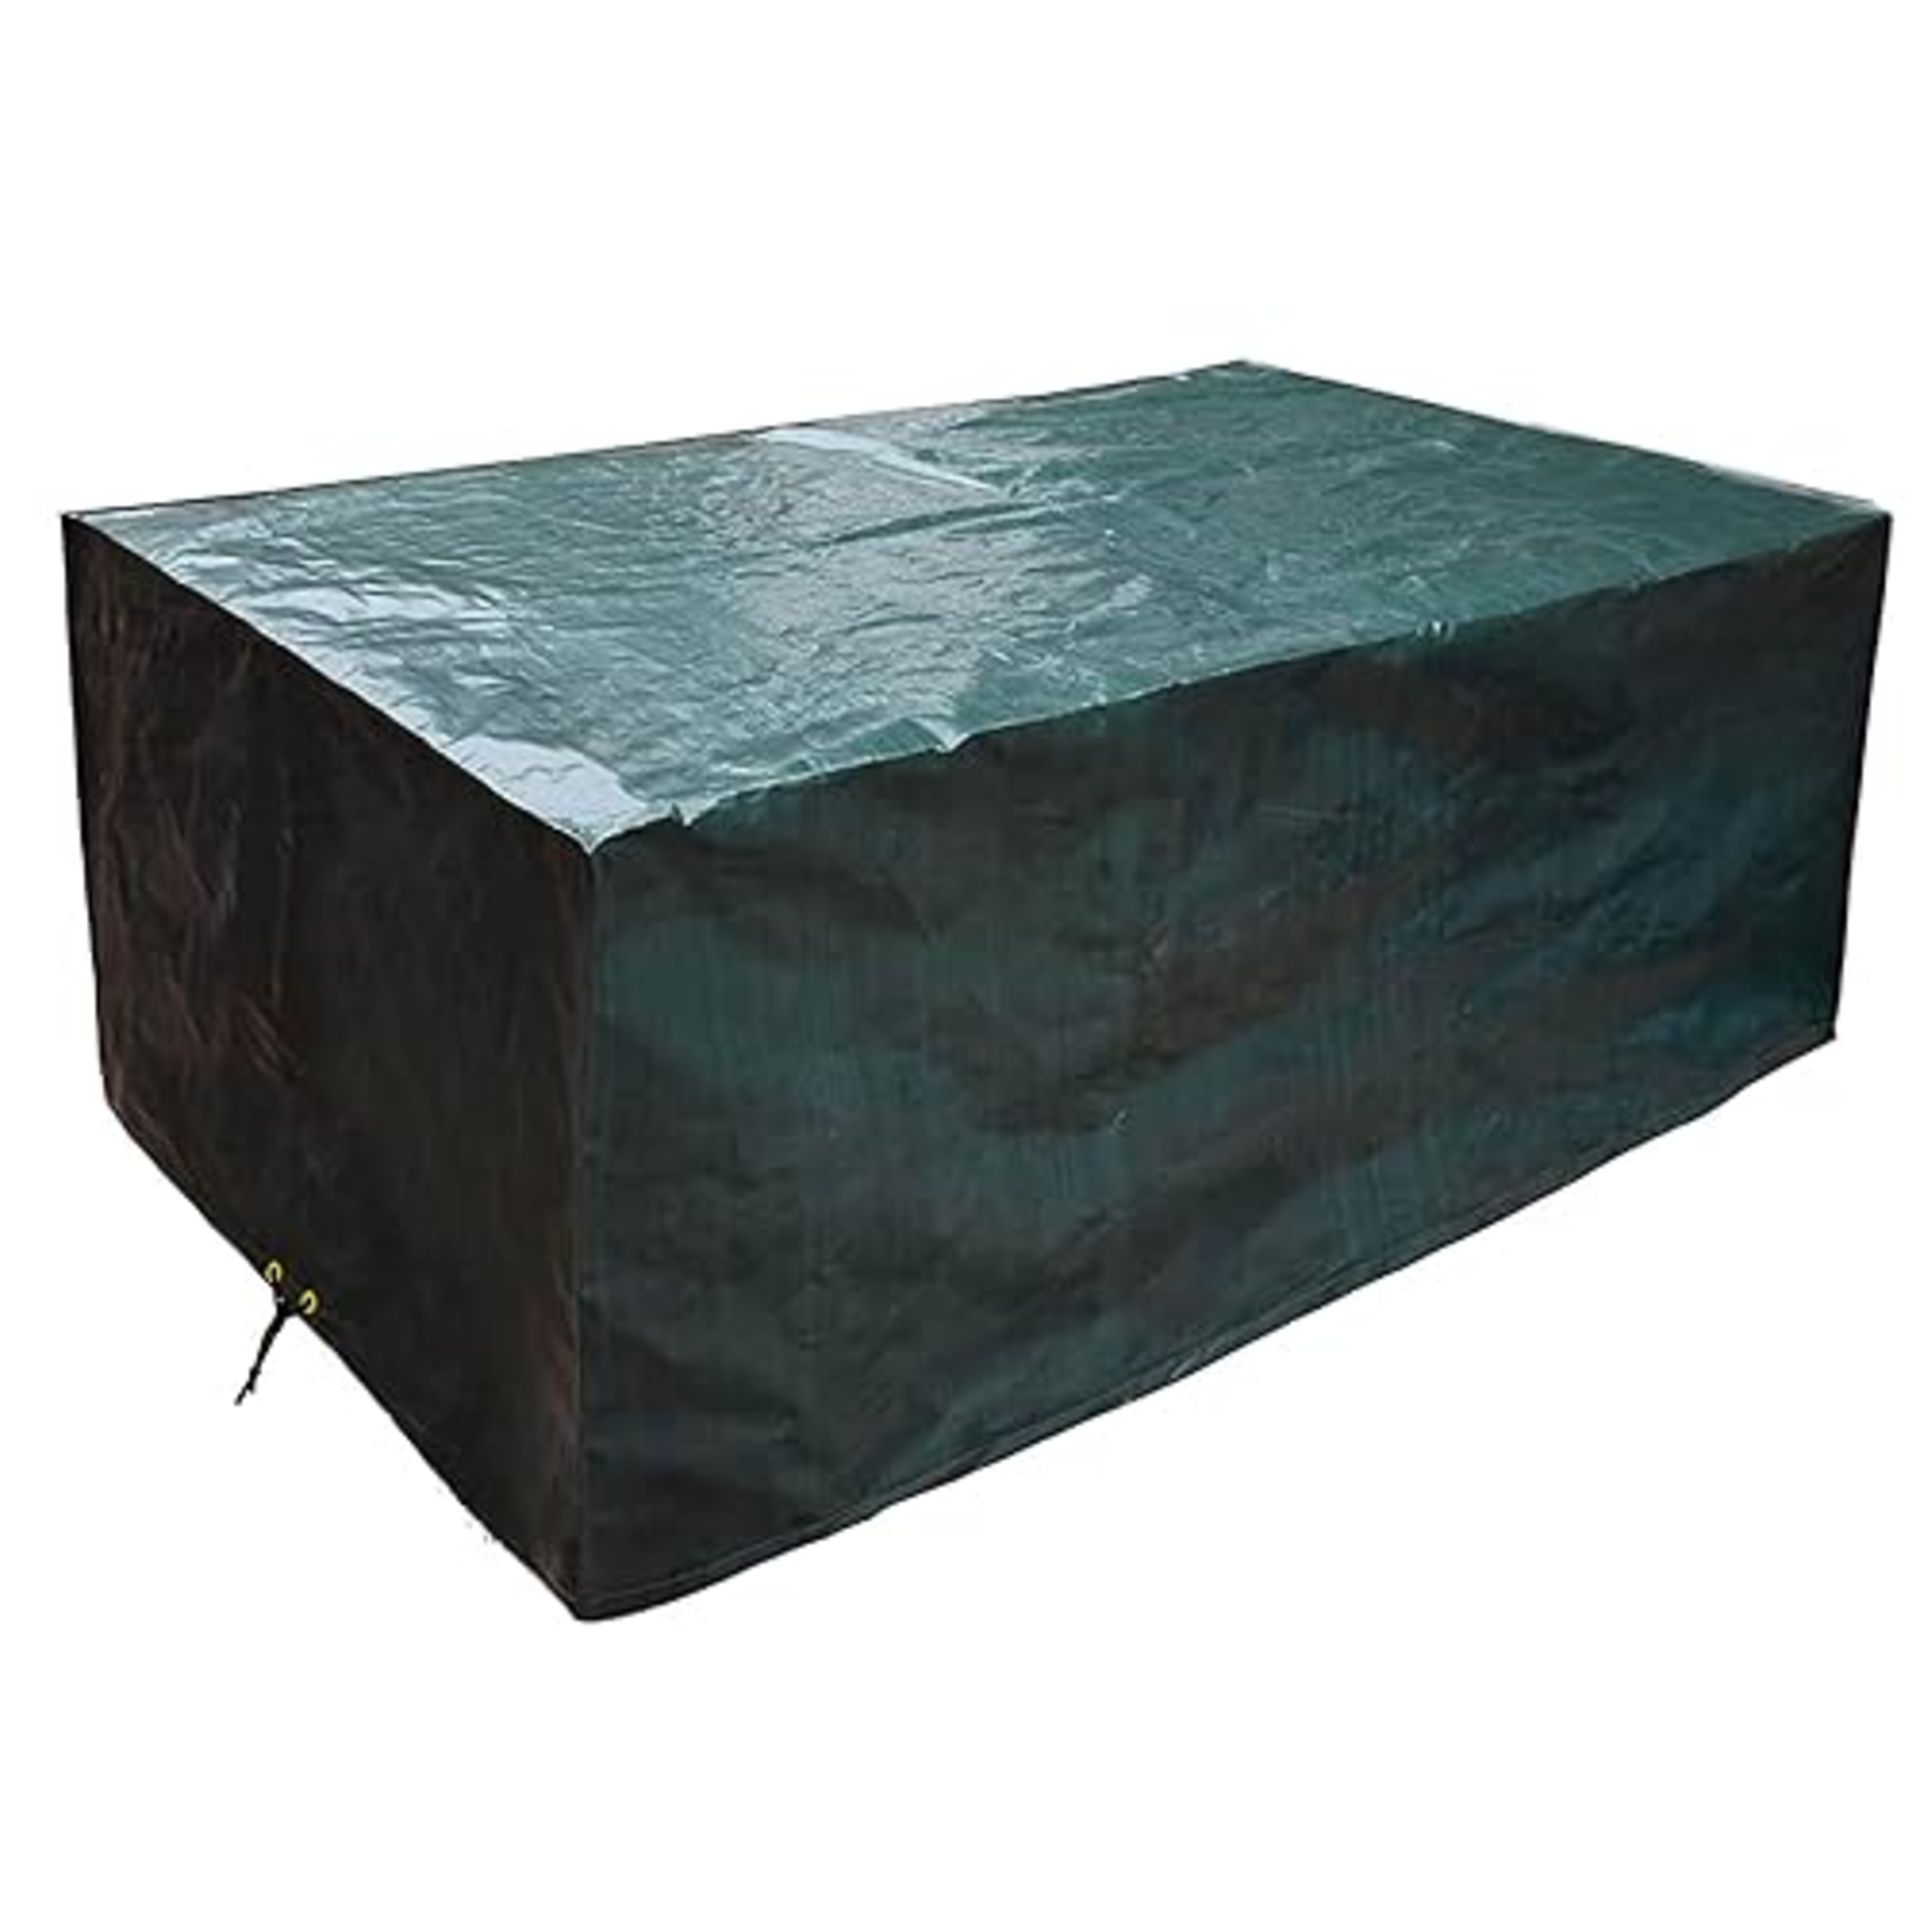 PATIO PLUS Outdoor Transparent Furniture Set Cover Waterproof - Garden Rectangular Covers for Patio